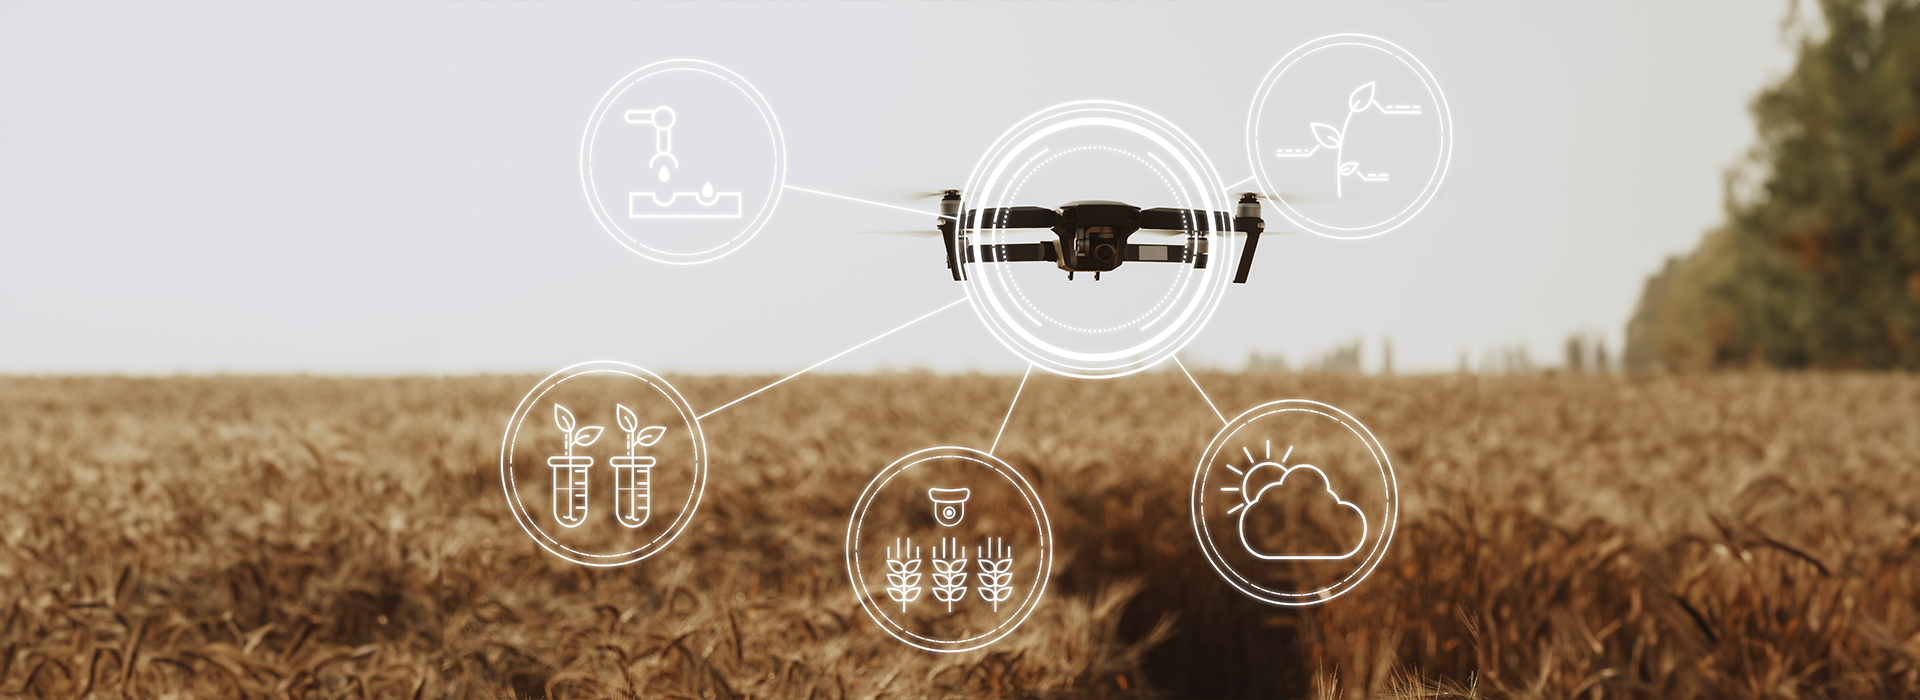 drone sobre campos de cultivo agricultura de precision